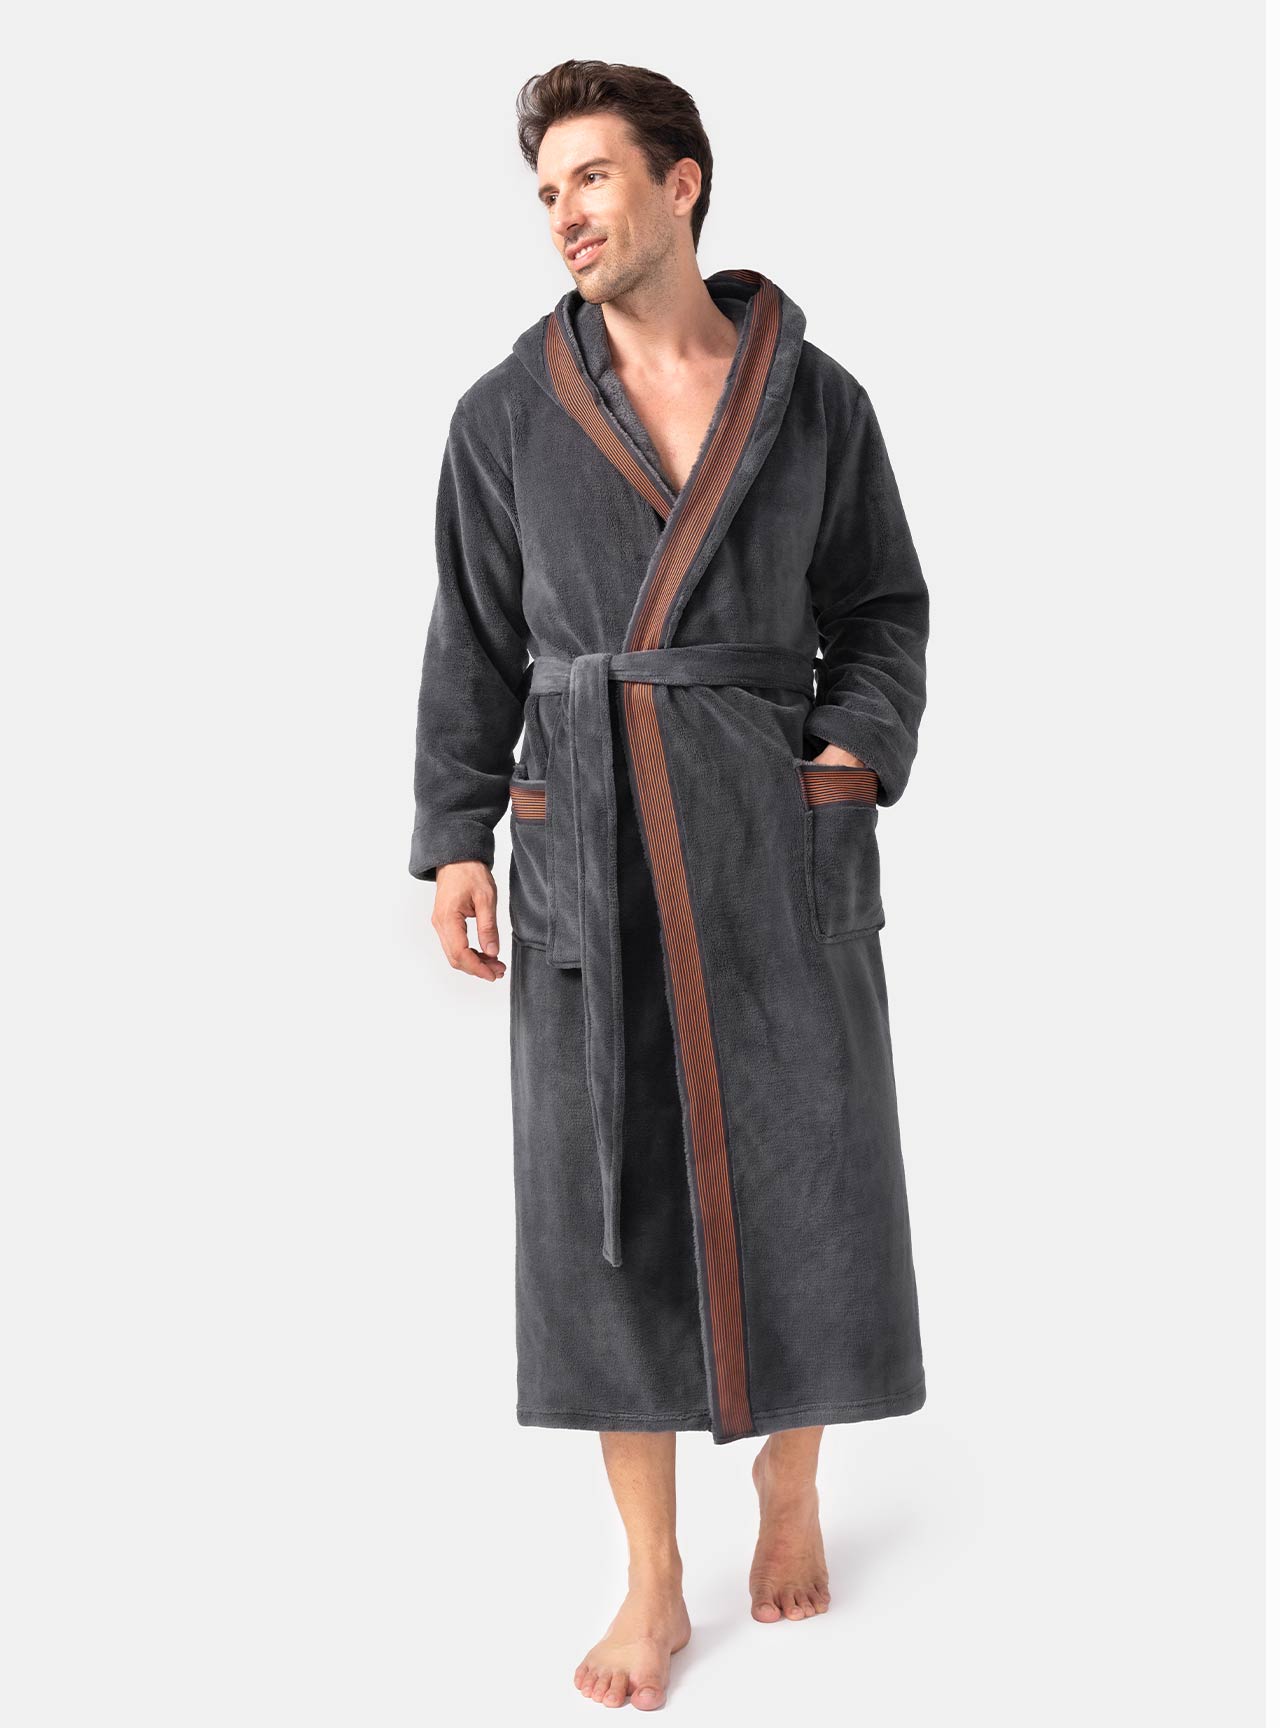 Acrossage Women's Plush Fleece Robe Warm Loose Sherpa Bathrobe Soft Robe  Winter Sleepwear at Amazon Women's Clothing store